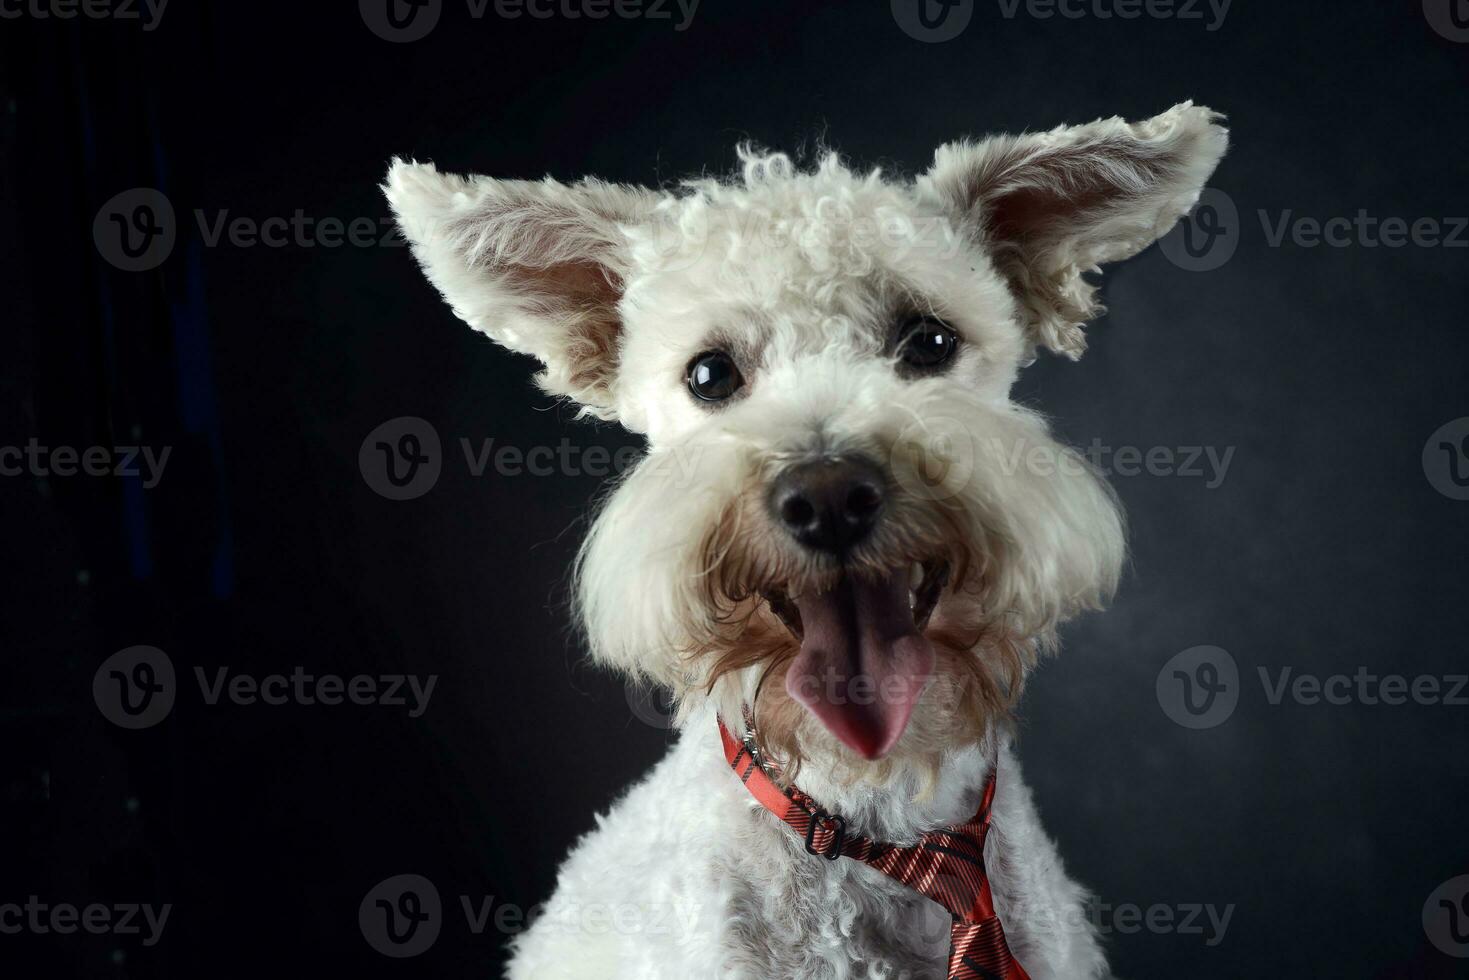 funny dog with flying ears portrait in dark photo studio